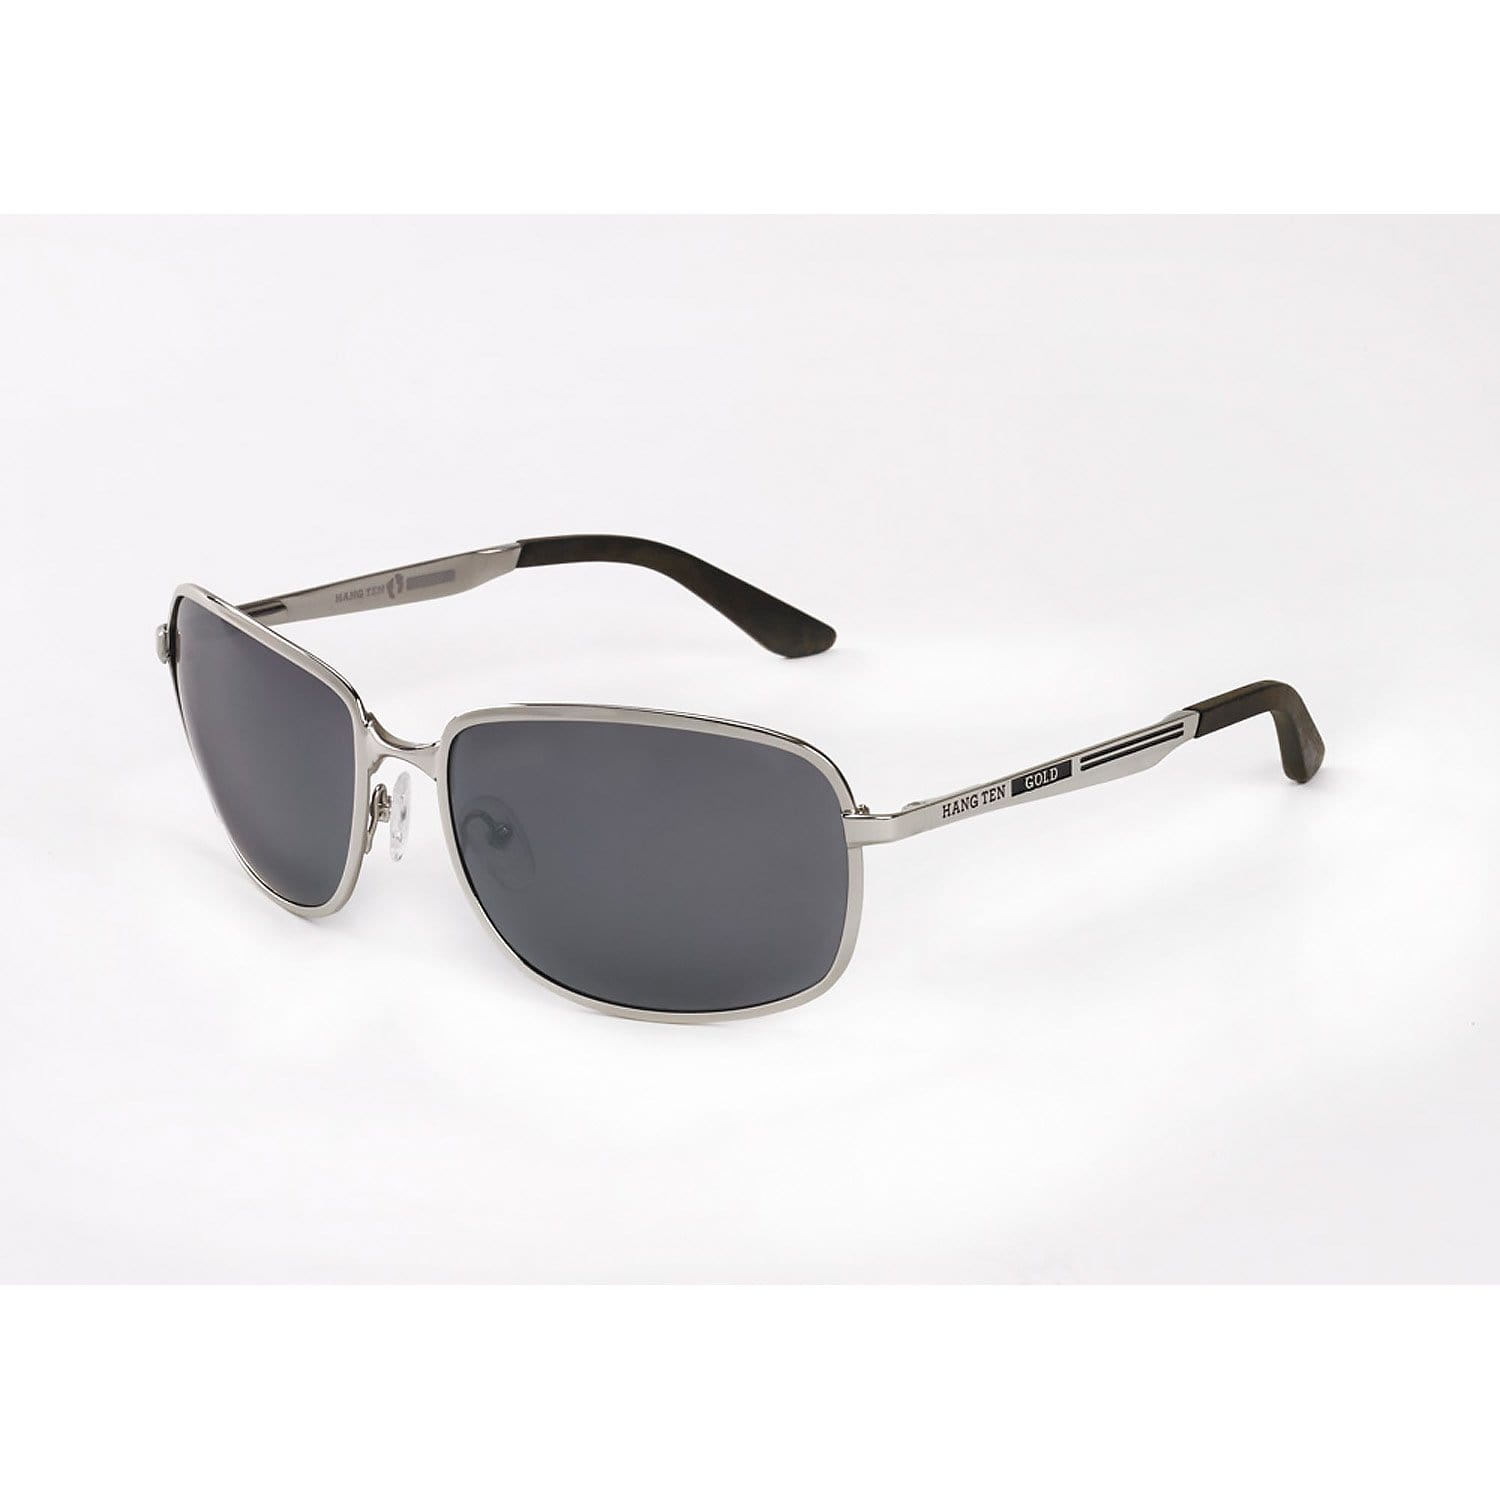 Hang Ten Gold Apparel : Eyewear - Sunglasses Hang Ten Gold Airstreamer-Shiny Silver/Smoke Lens